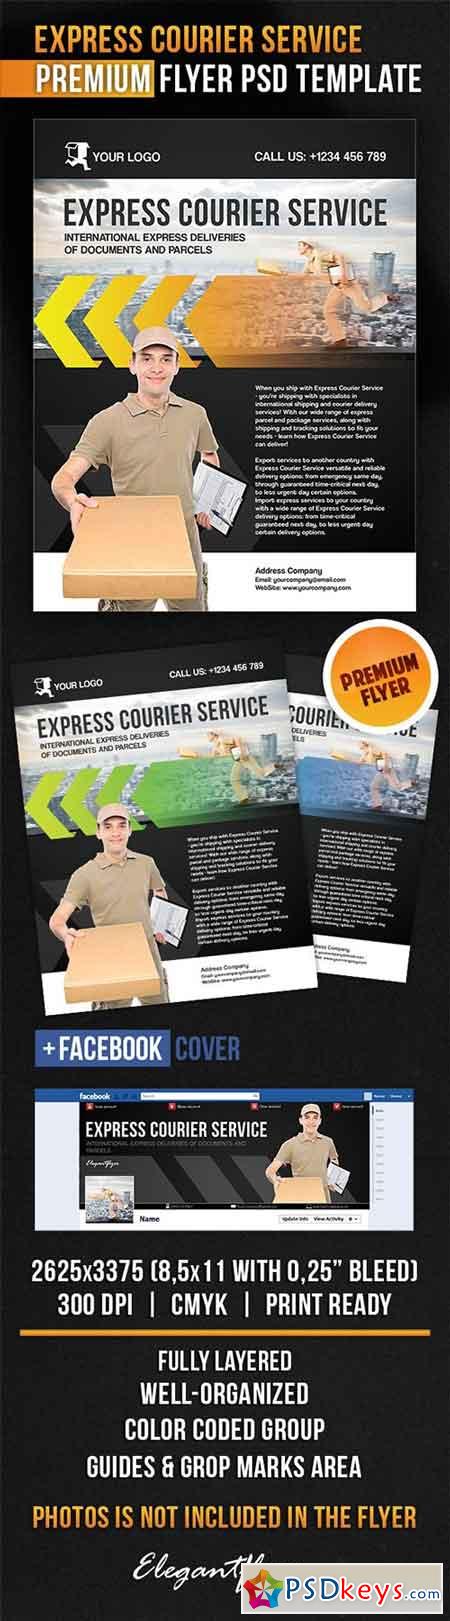 Express Courier Service Flyer PSD Template + Facebook Cover